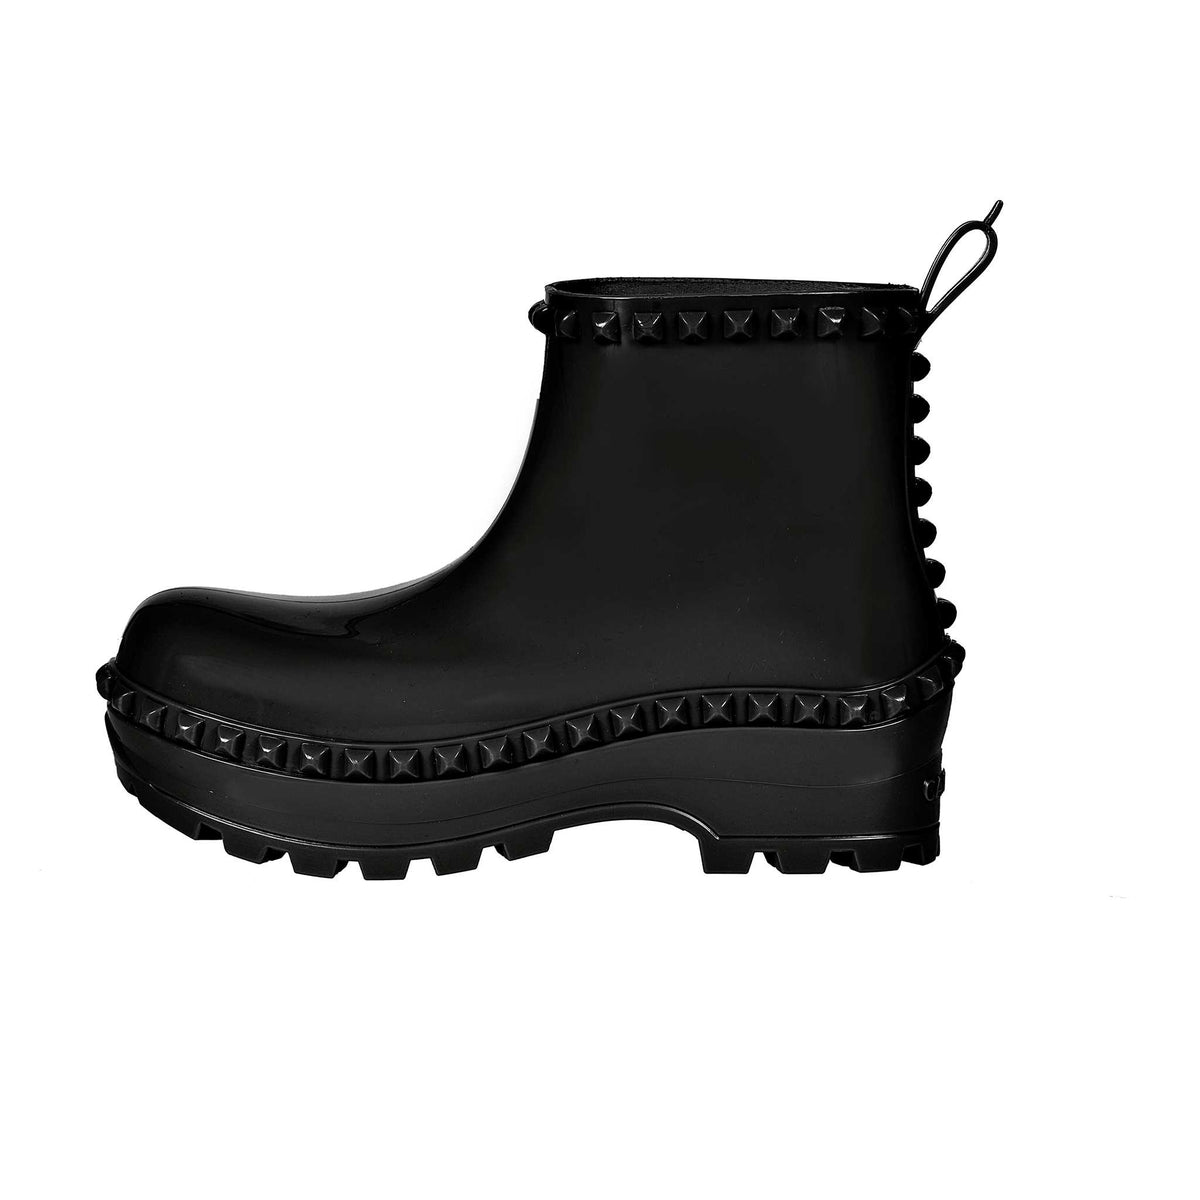 Studded Graziano Bottega puddle boots in color black